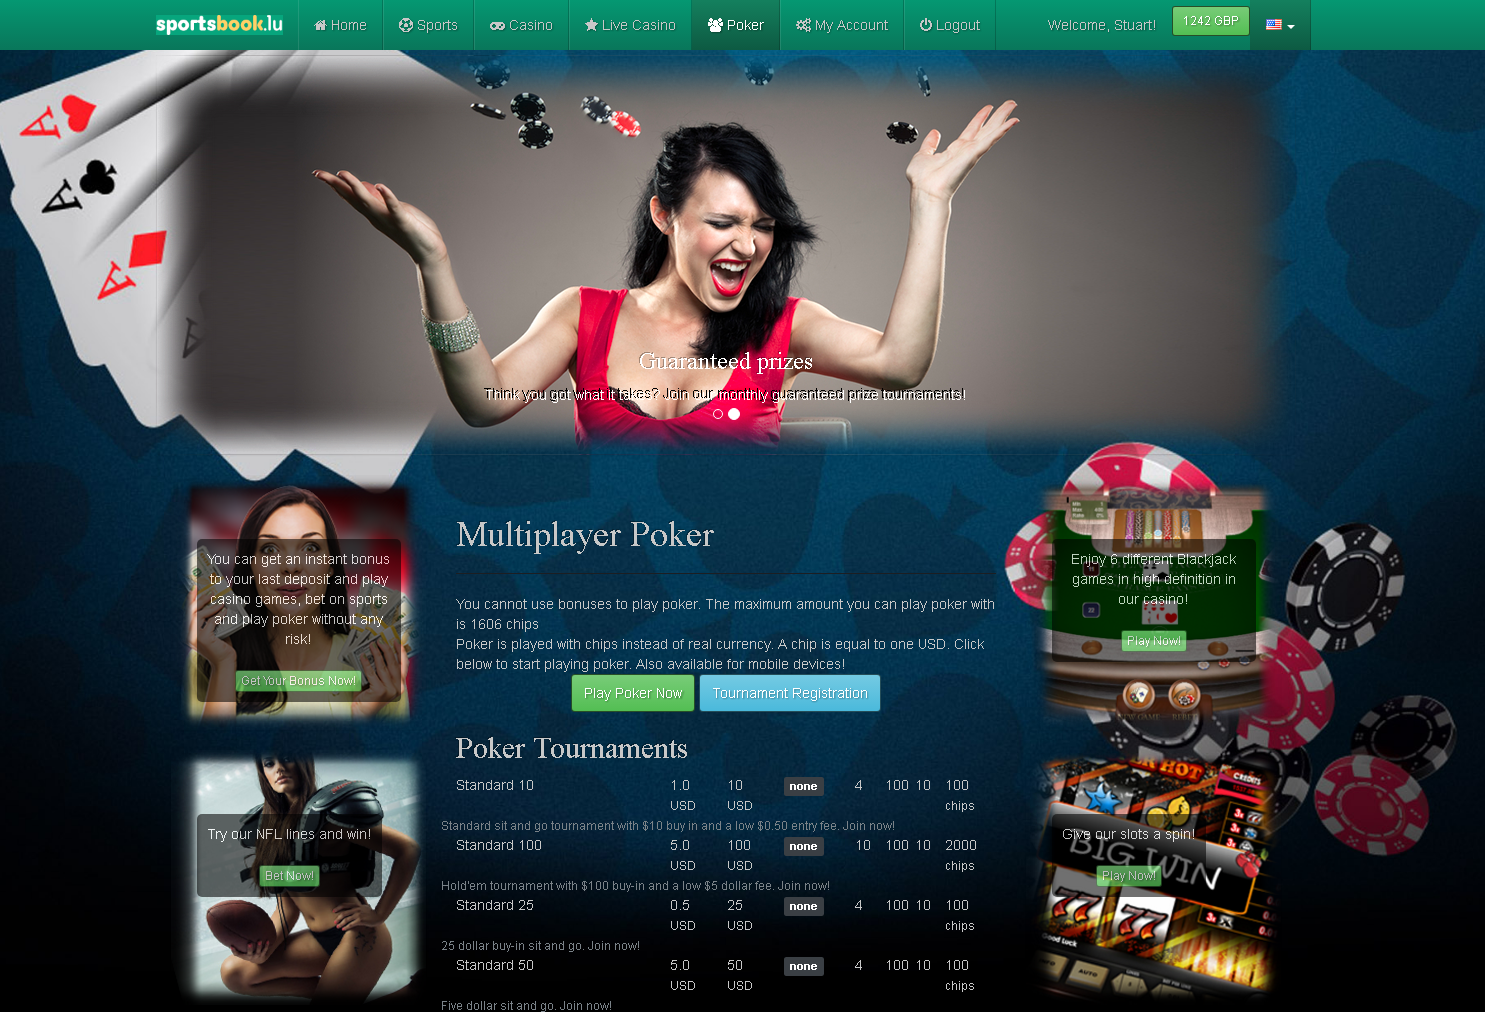 Mobile casino gaming